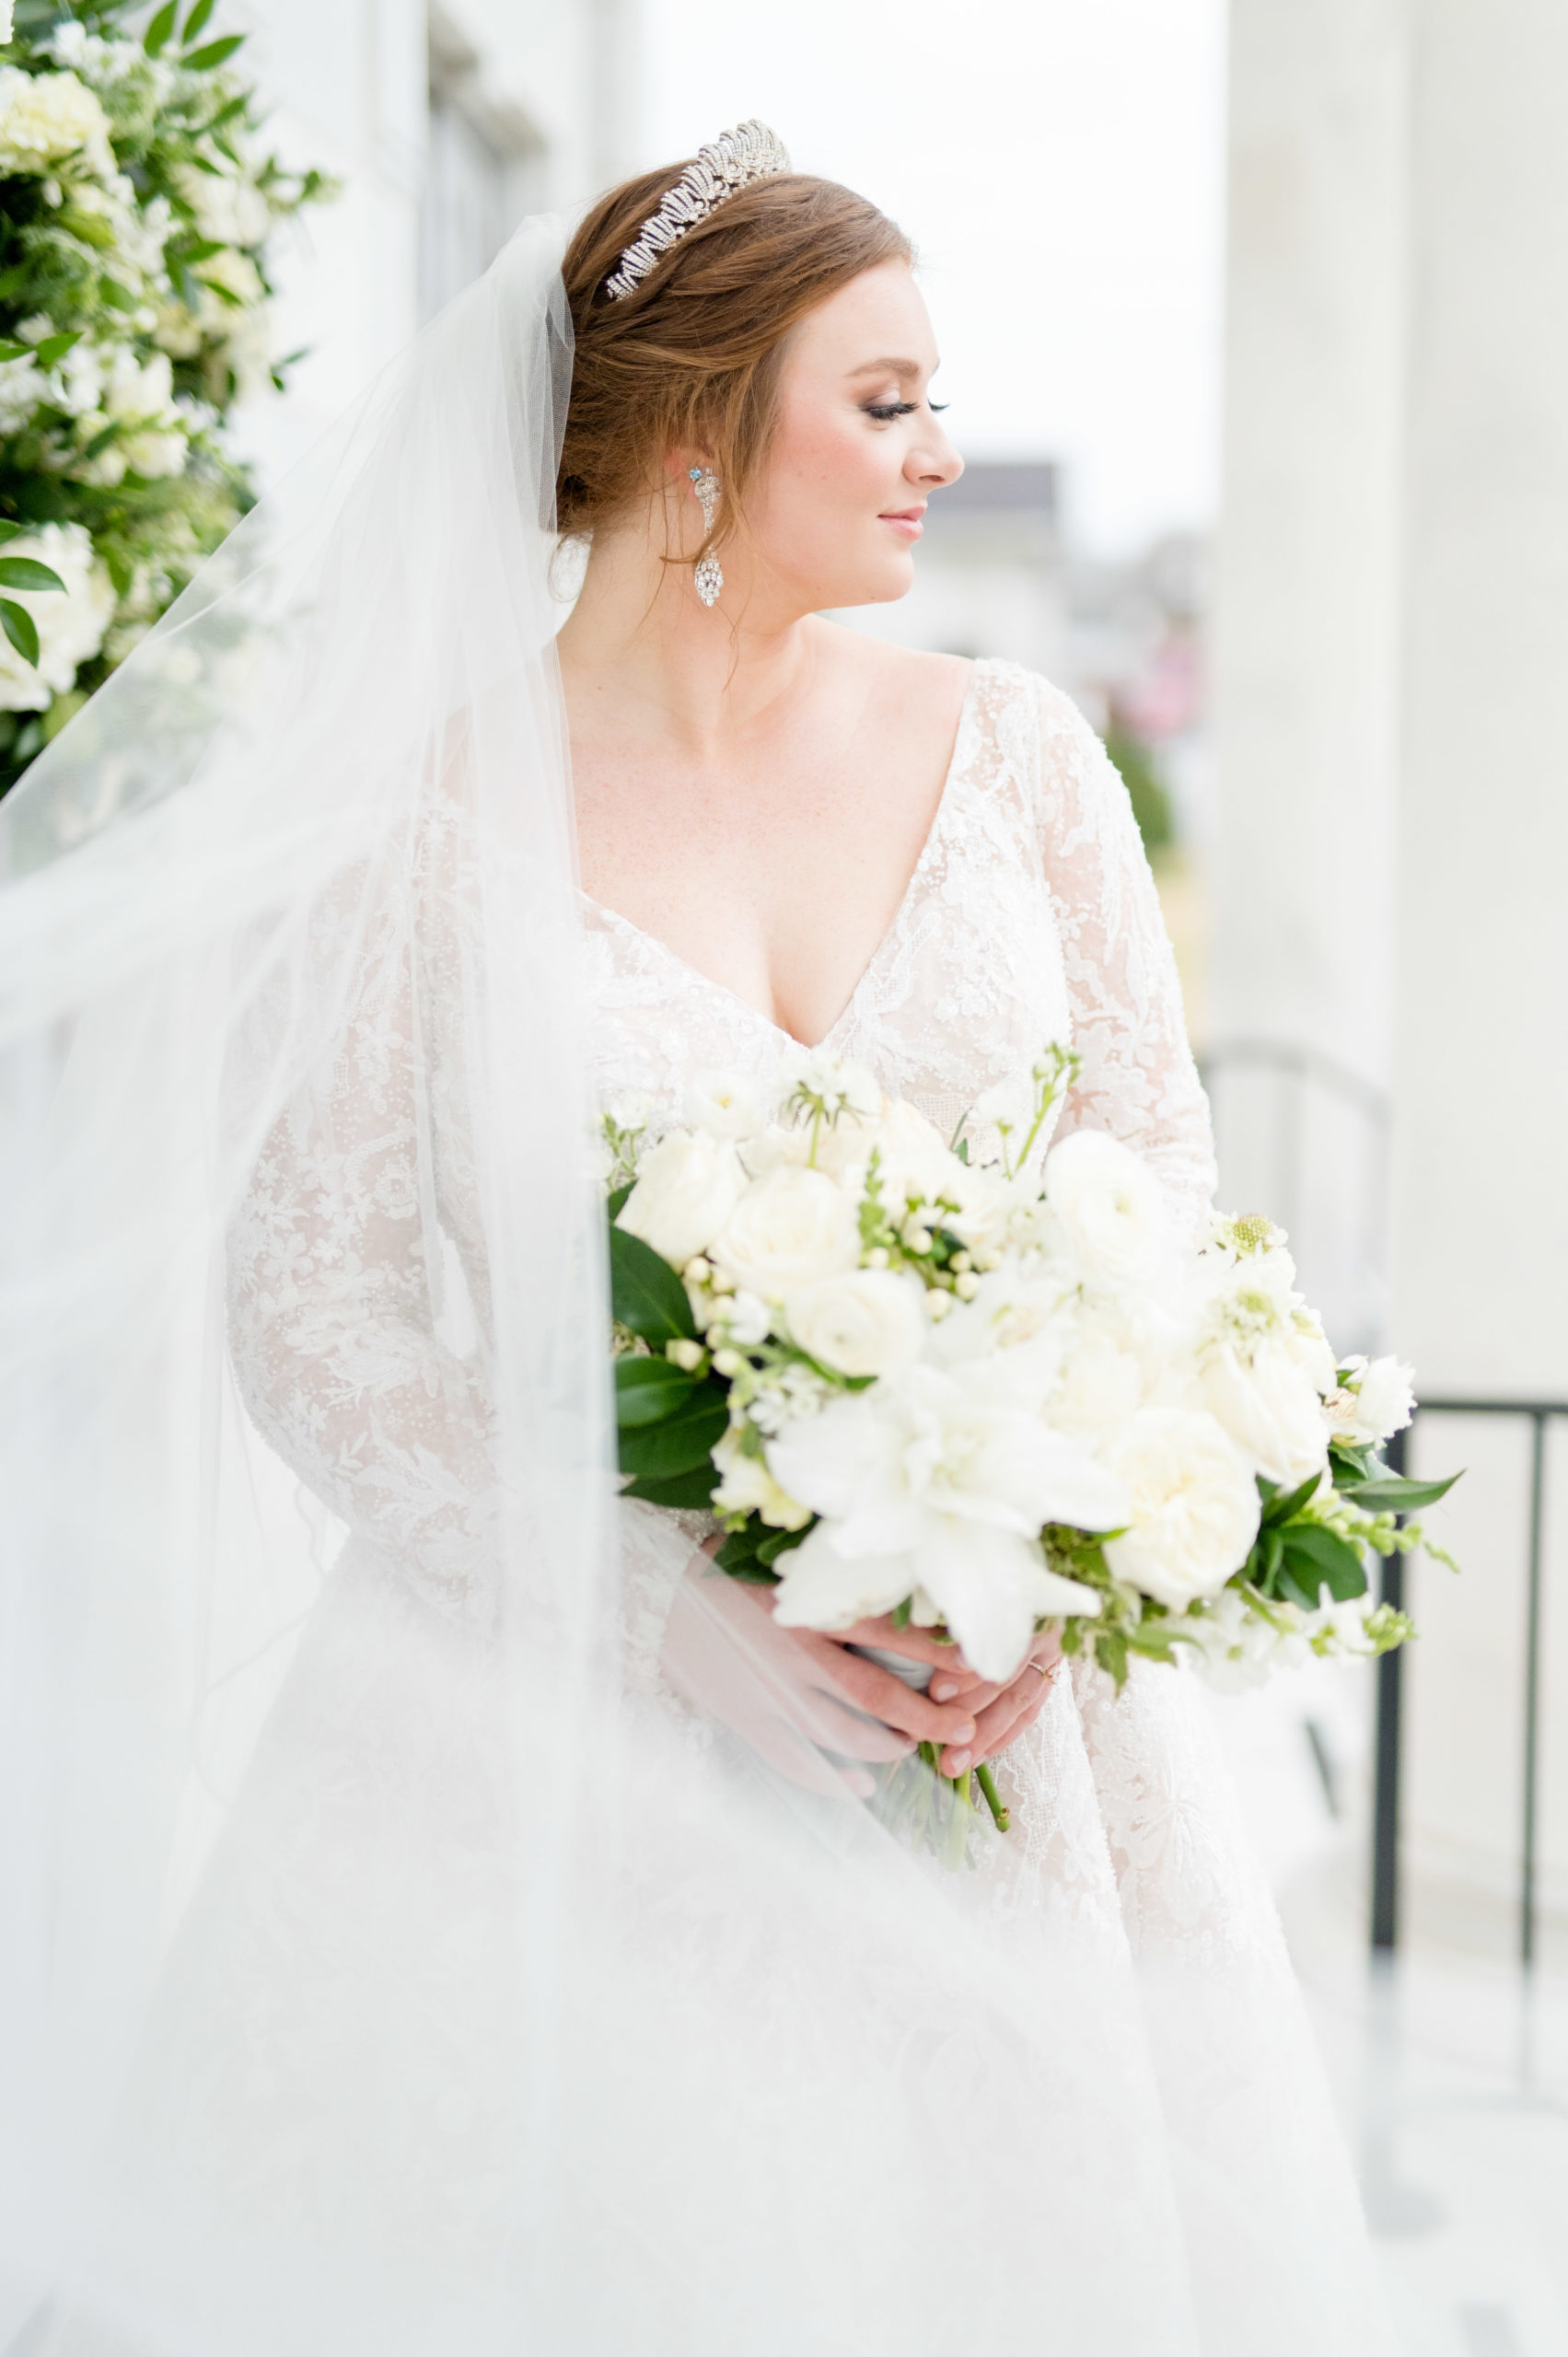 Bride looks over shoulder as veil blows in wind.